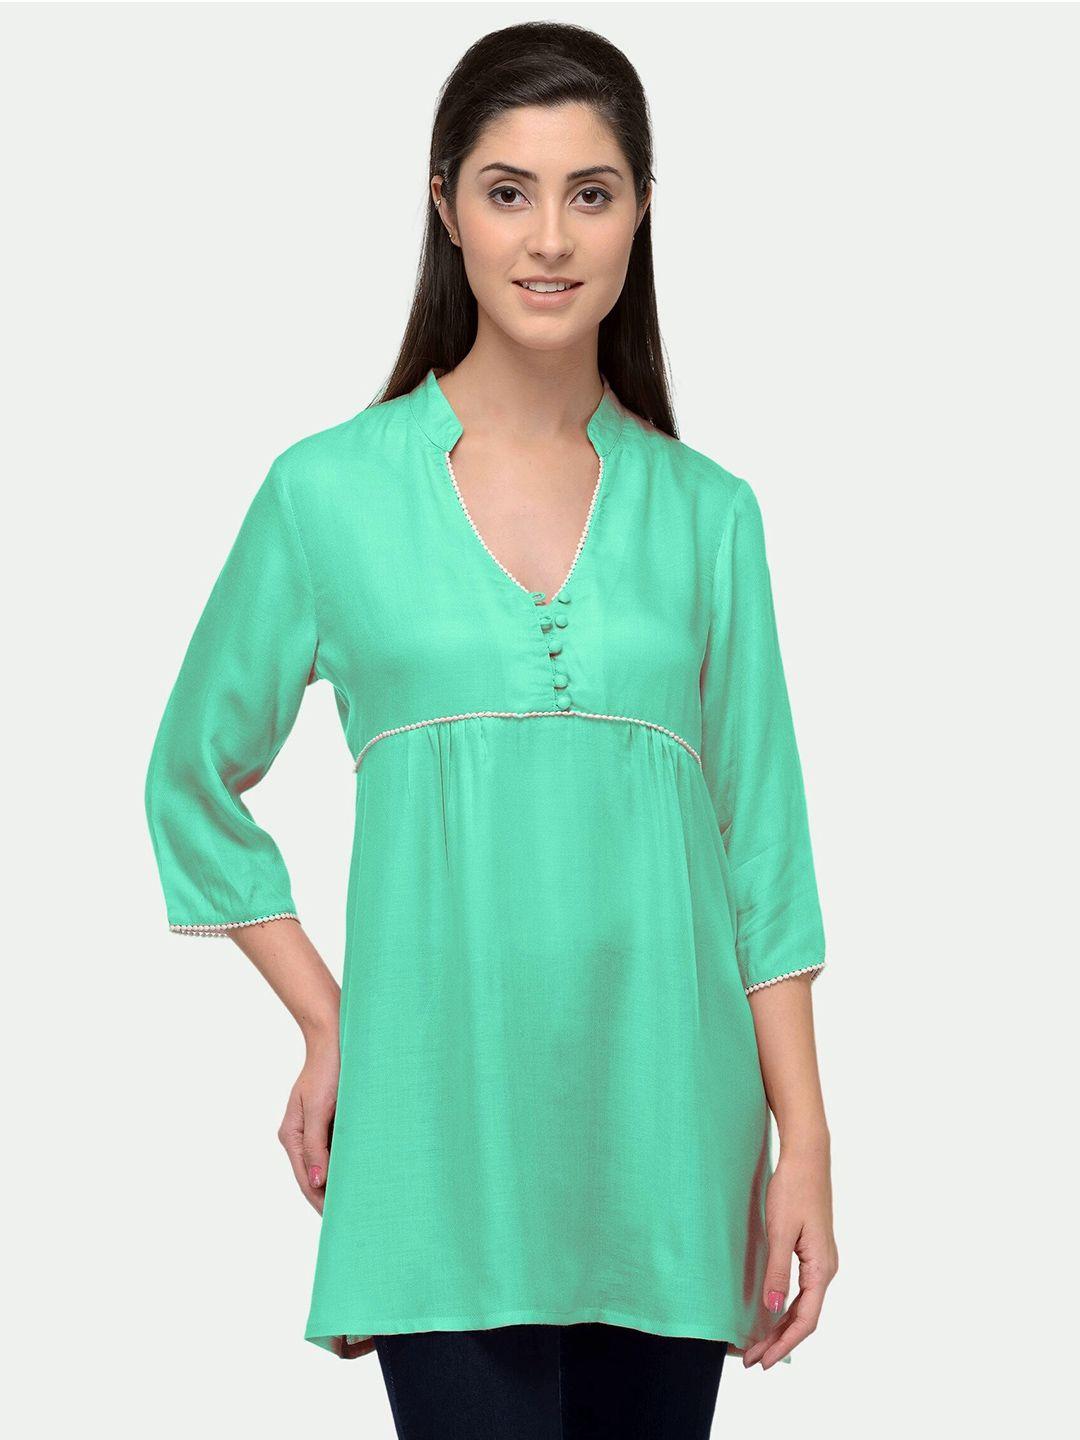 patrorna-women-sea-green-solid-mandarin-collar-top